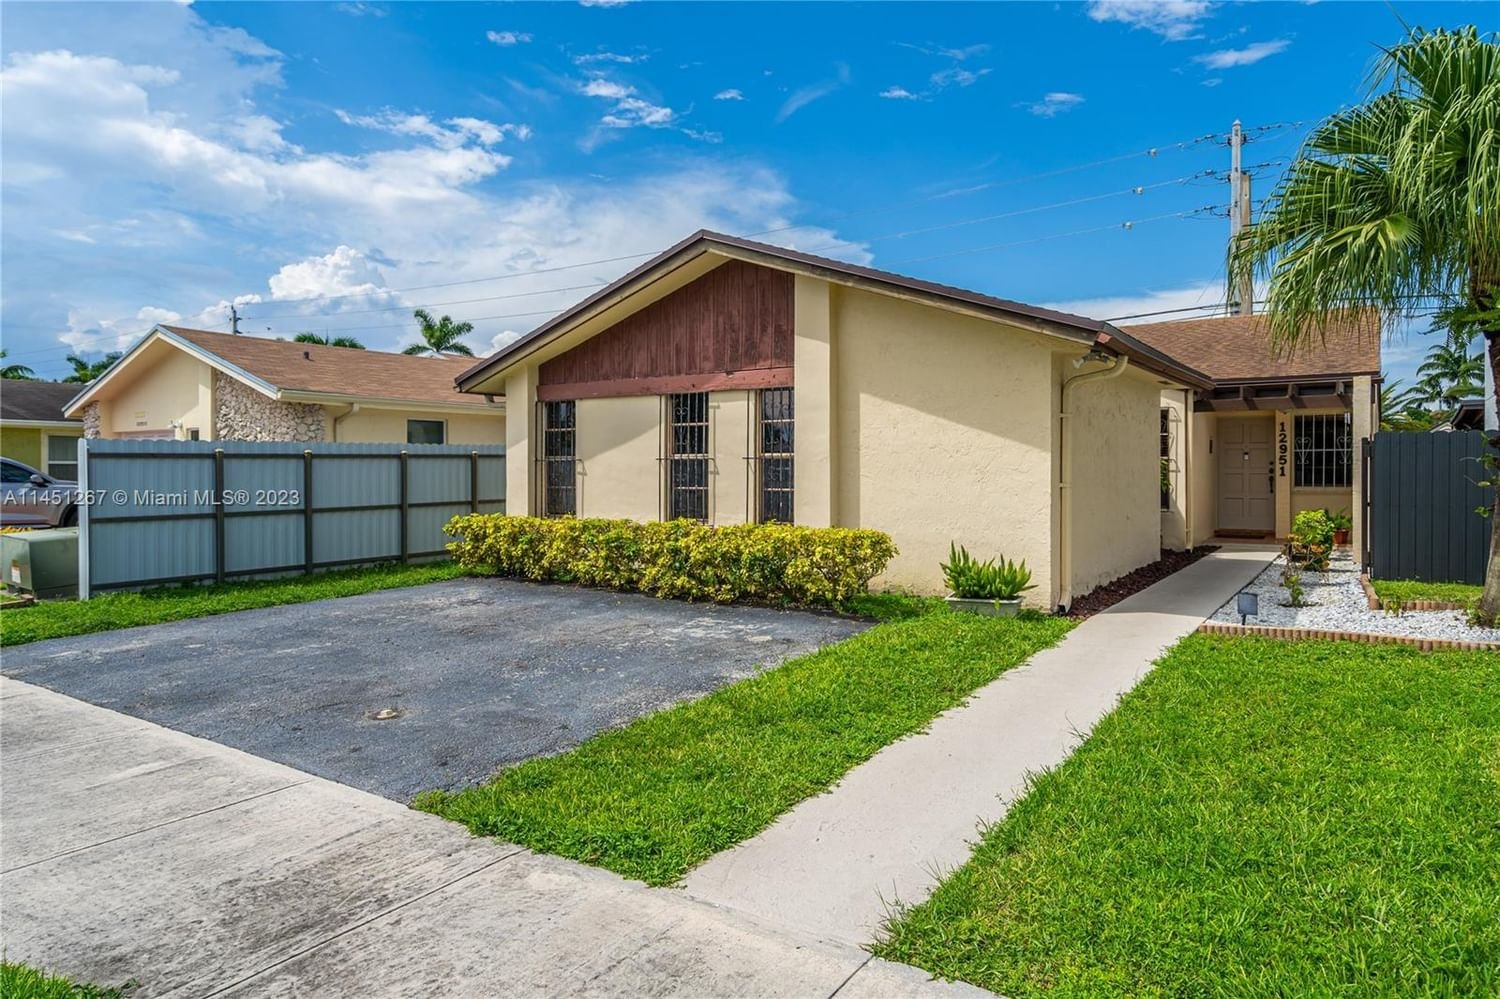 Real estate property located at 12951 56th Ter, Miami-Dade County, Miami, FL